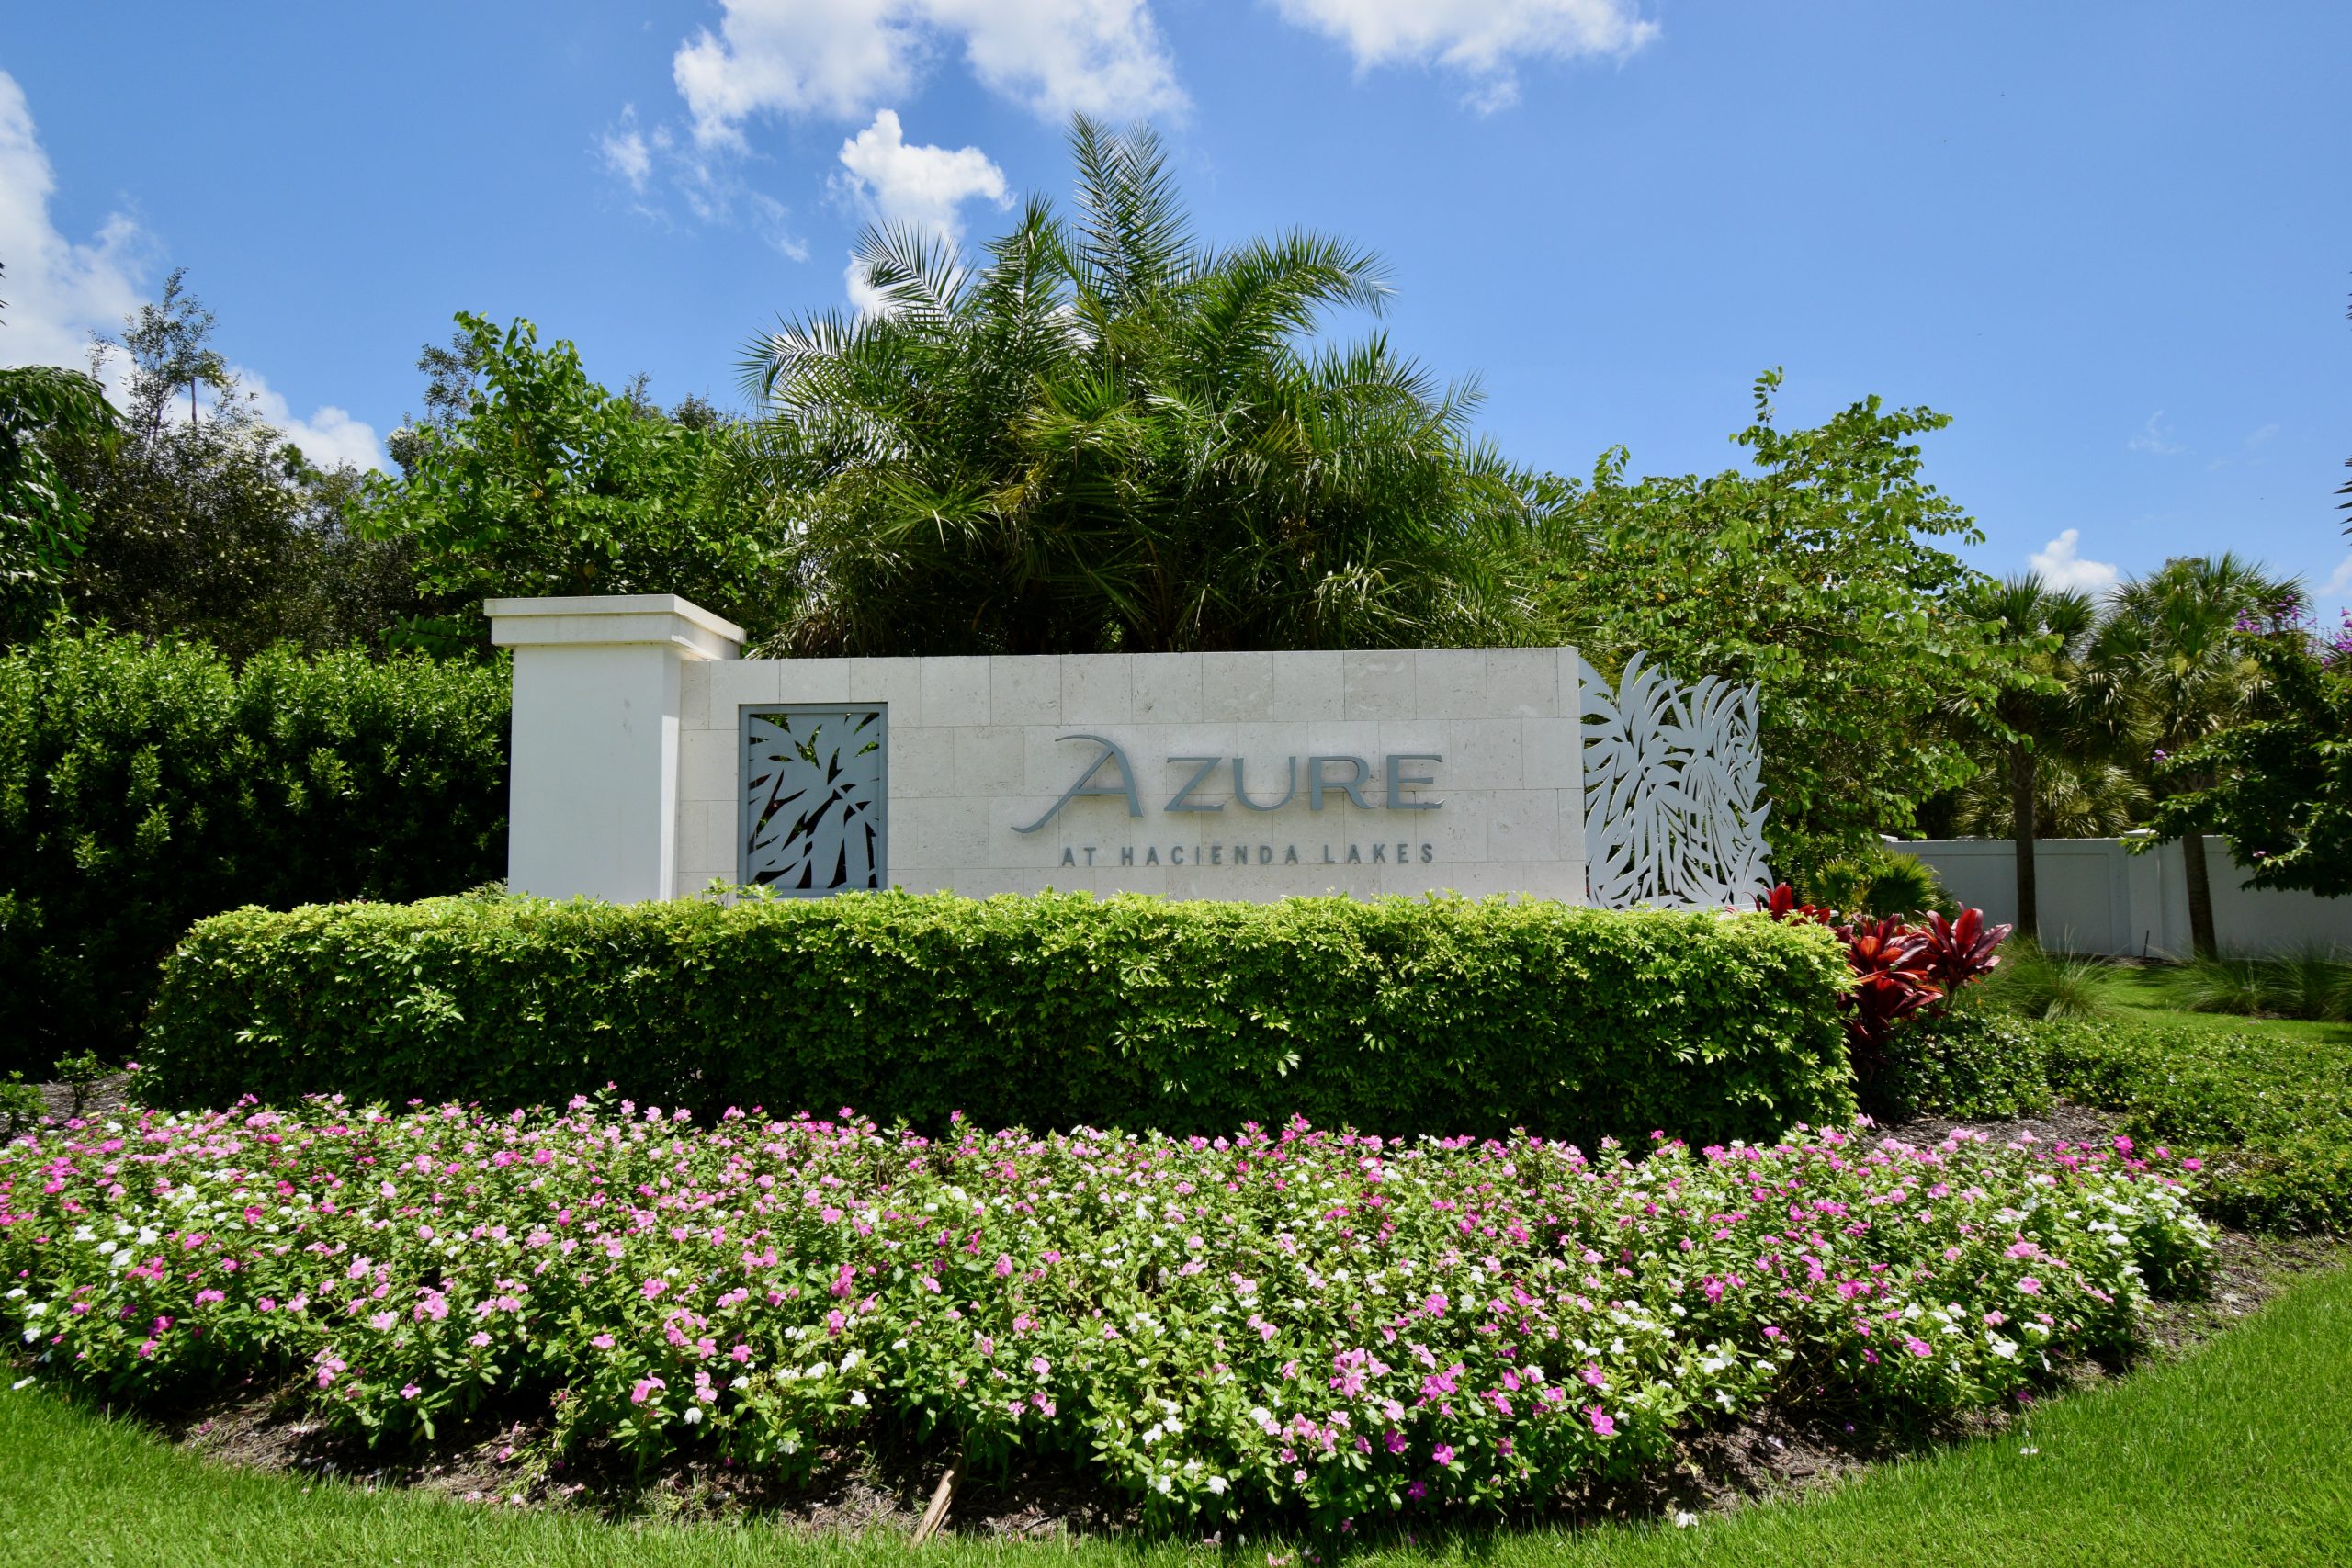 Azure at Hacienda Lakes - Entry Monument Sign